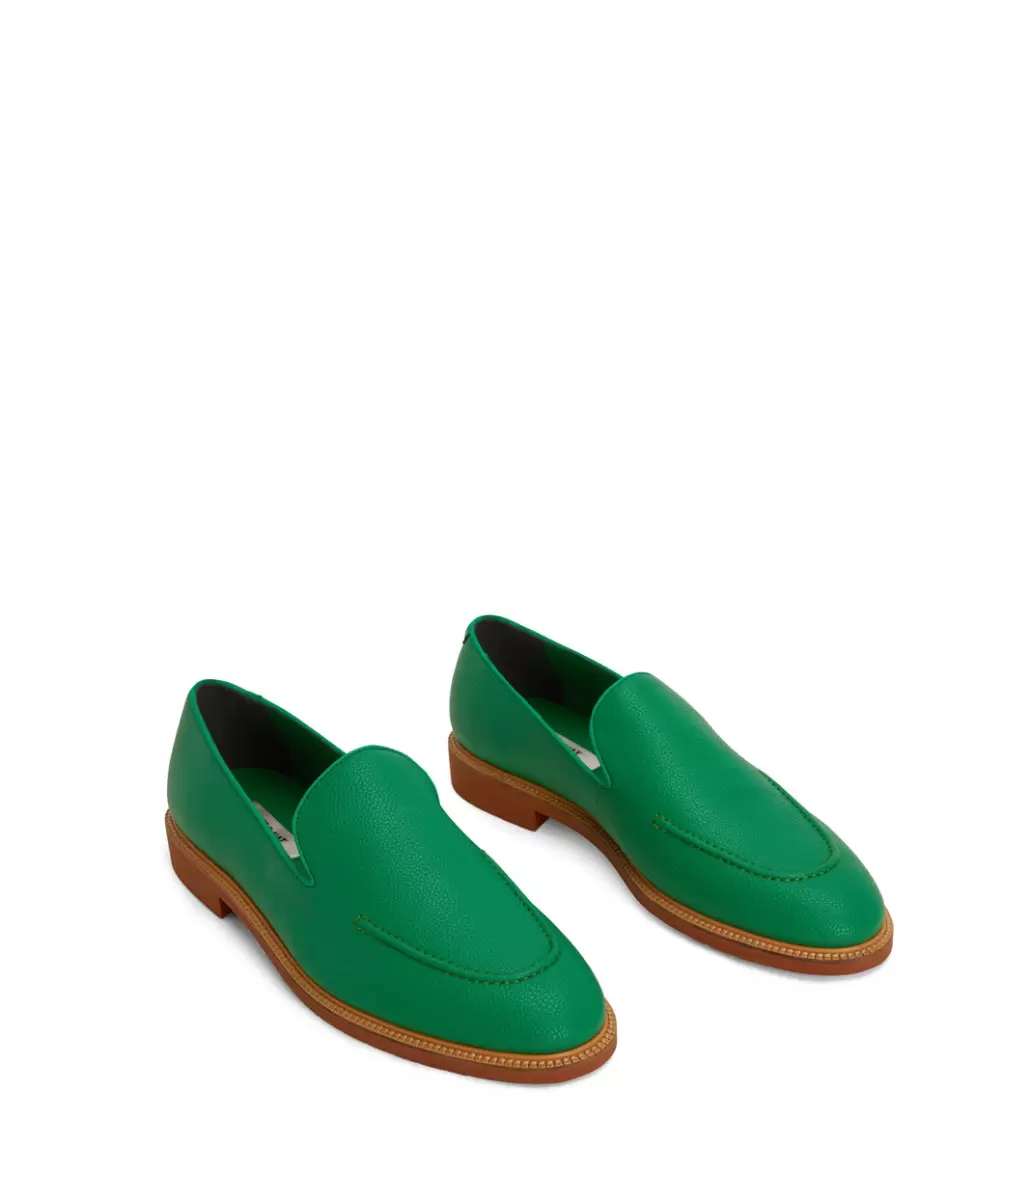 Matt & Nat Limited Time Offer Footwear Altman Men's Vegan Slip On Loafers Men Green - 3